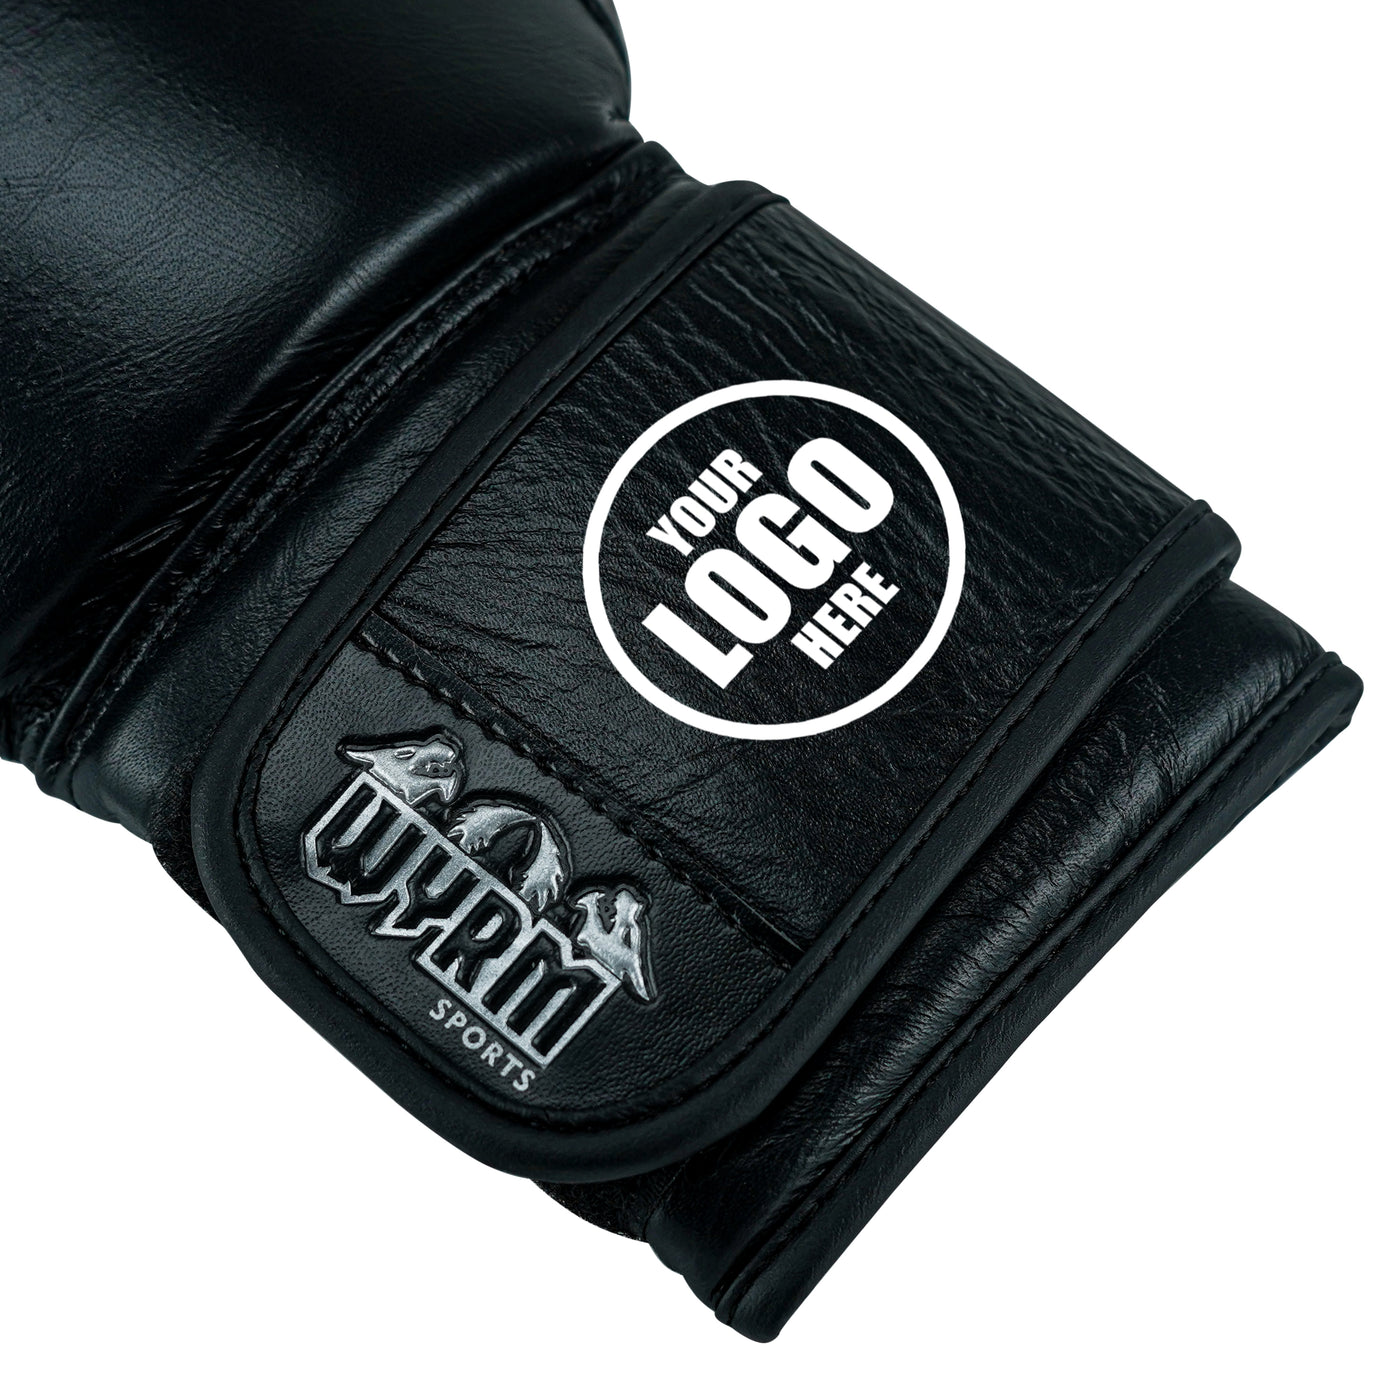 Custom Black Genuine Leather Boxing Training Gloves  C21